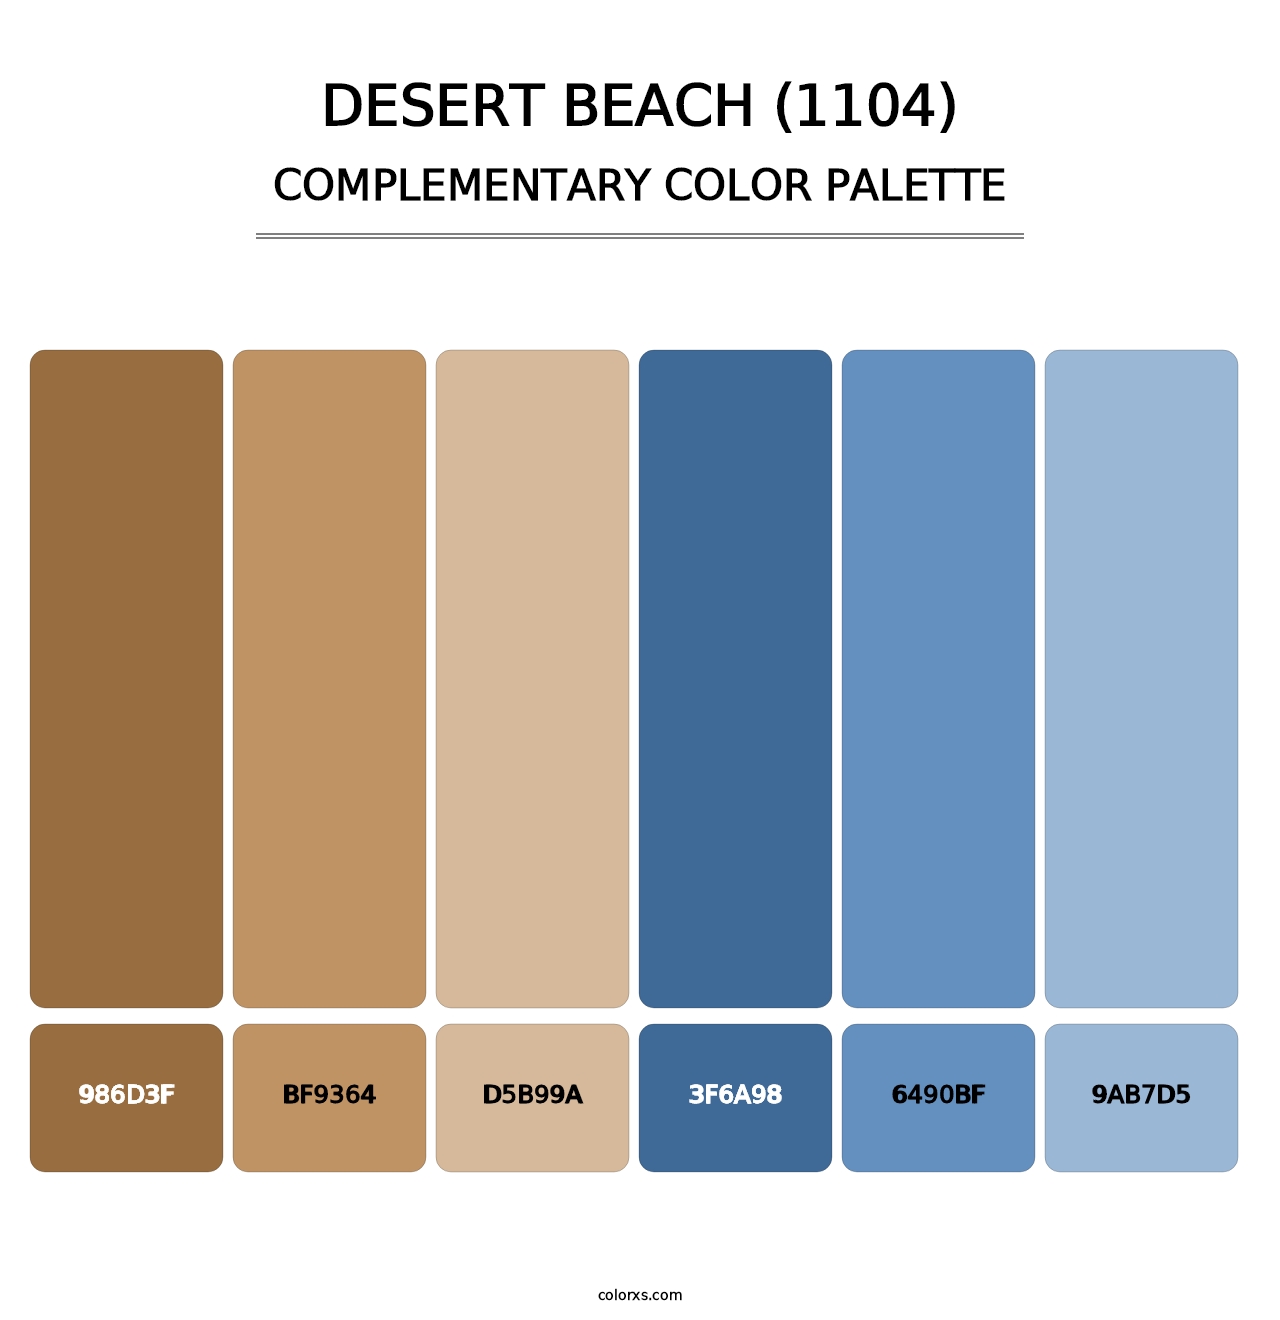 Desert Beach (1104) - Complementary Color Palette